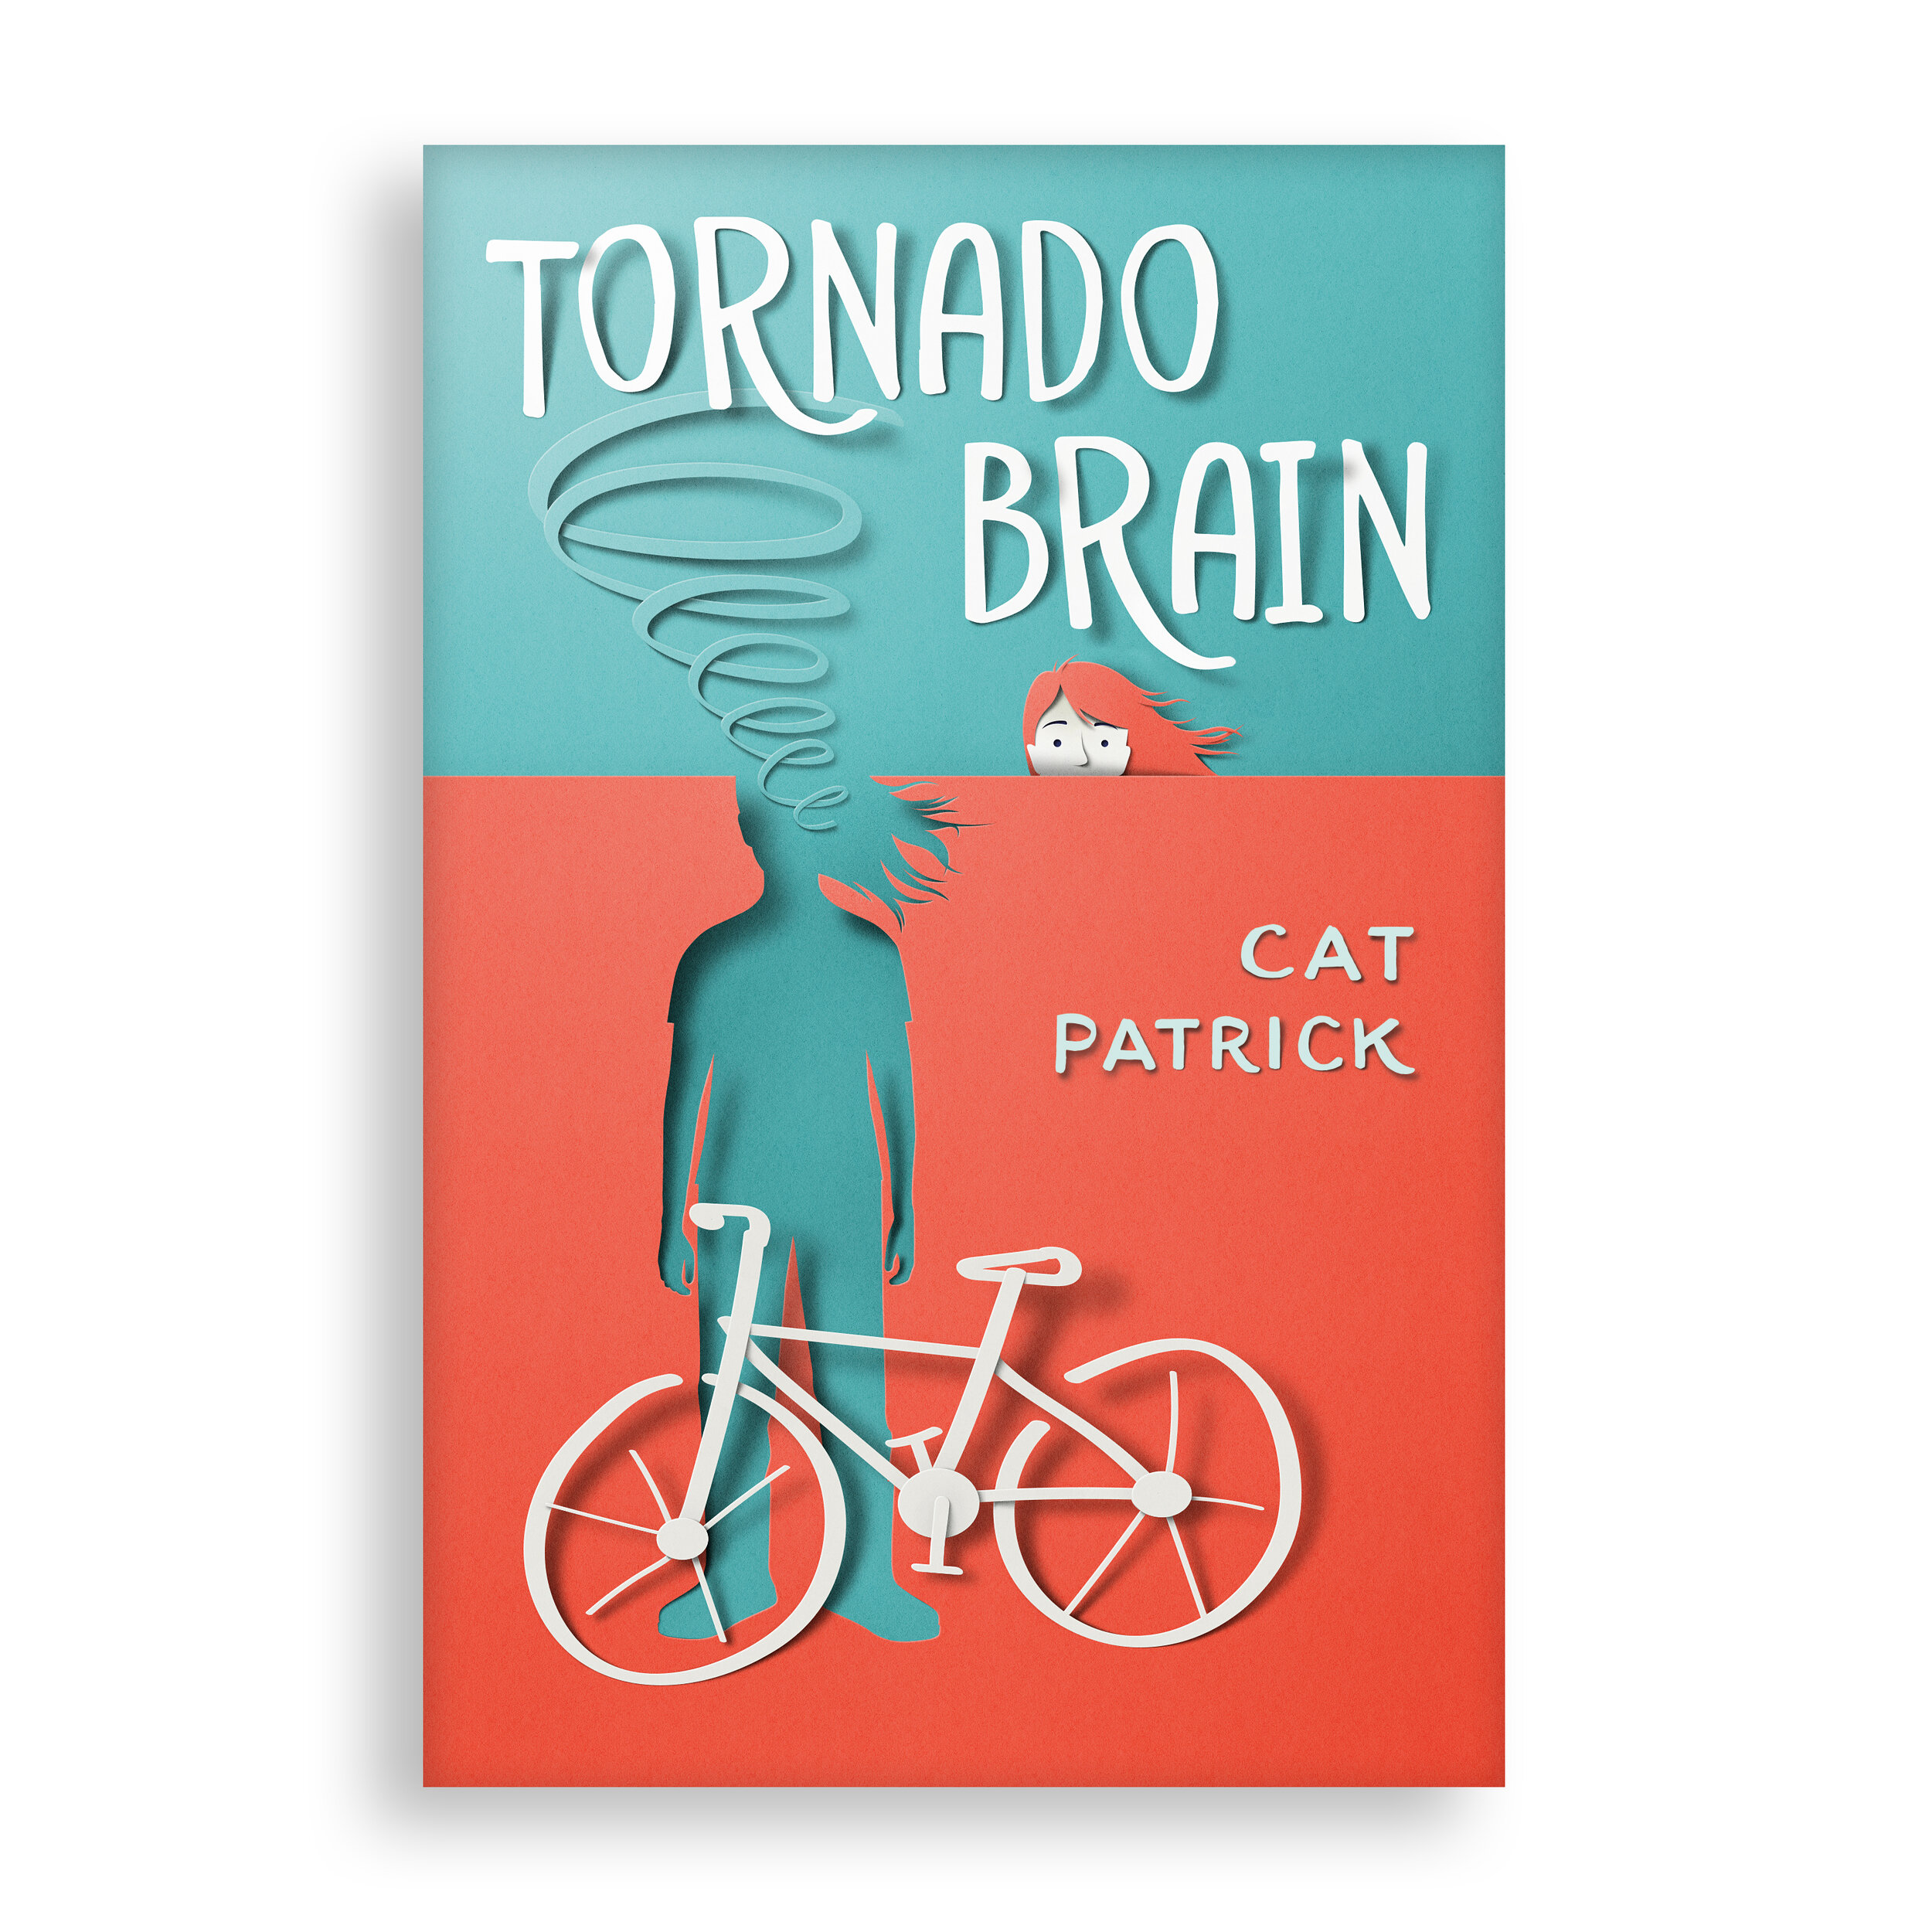 Tornado Brain